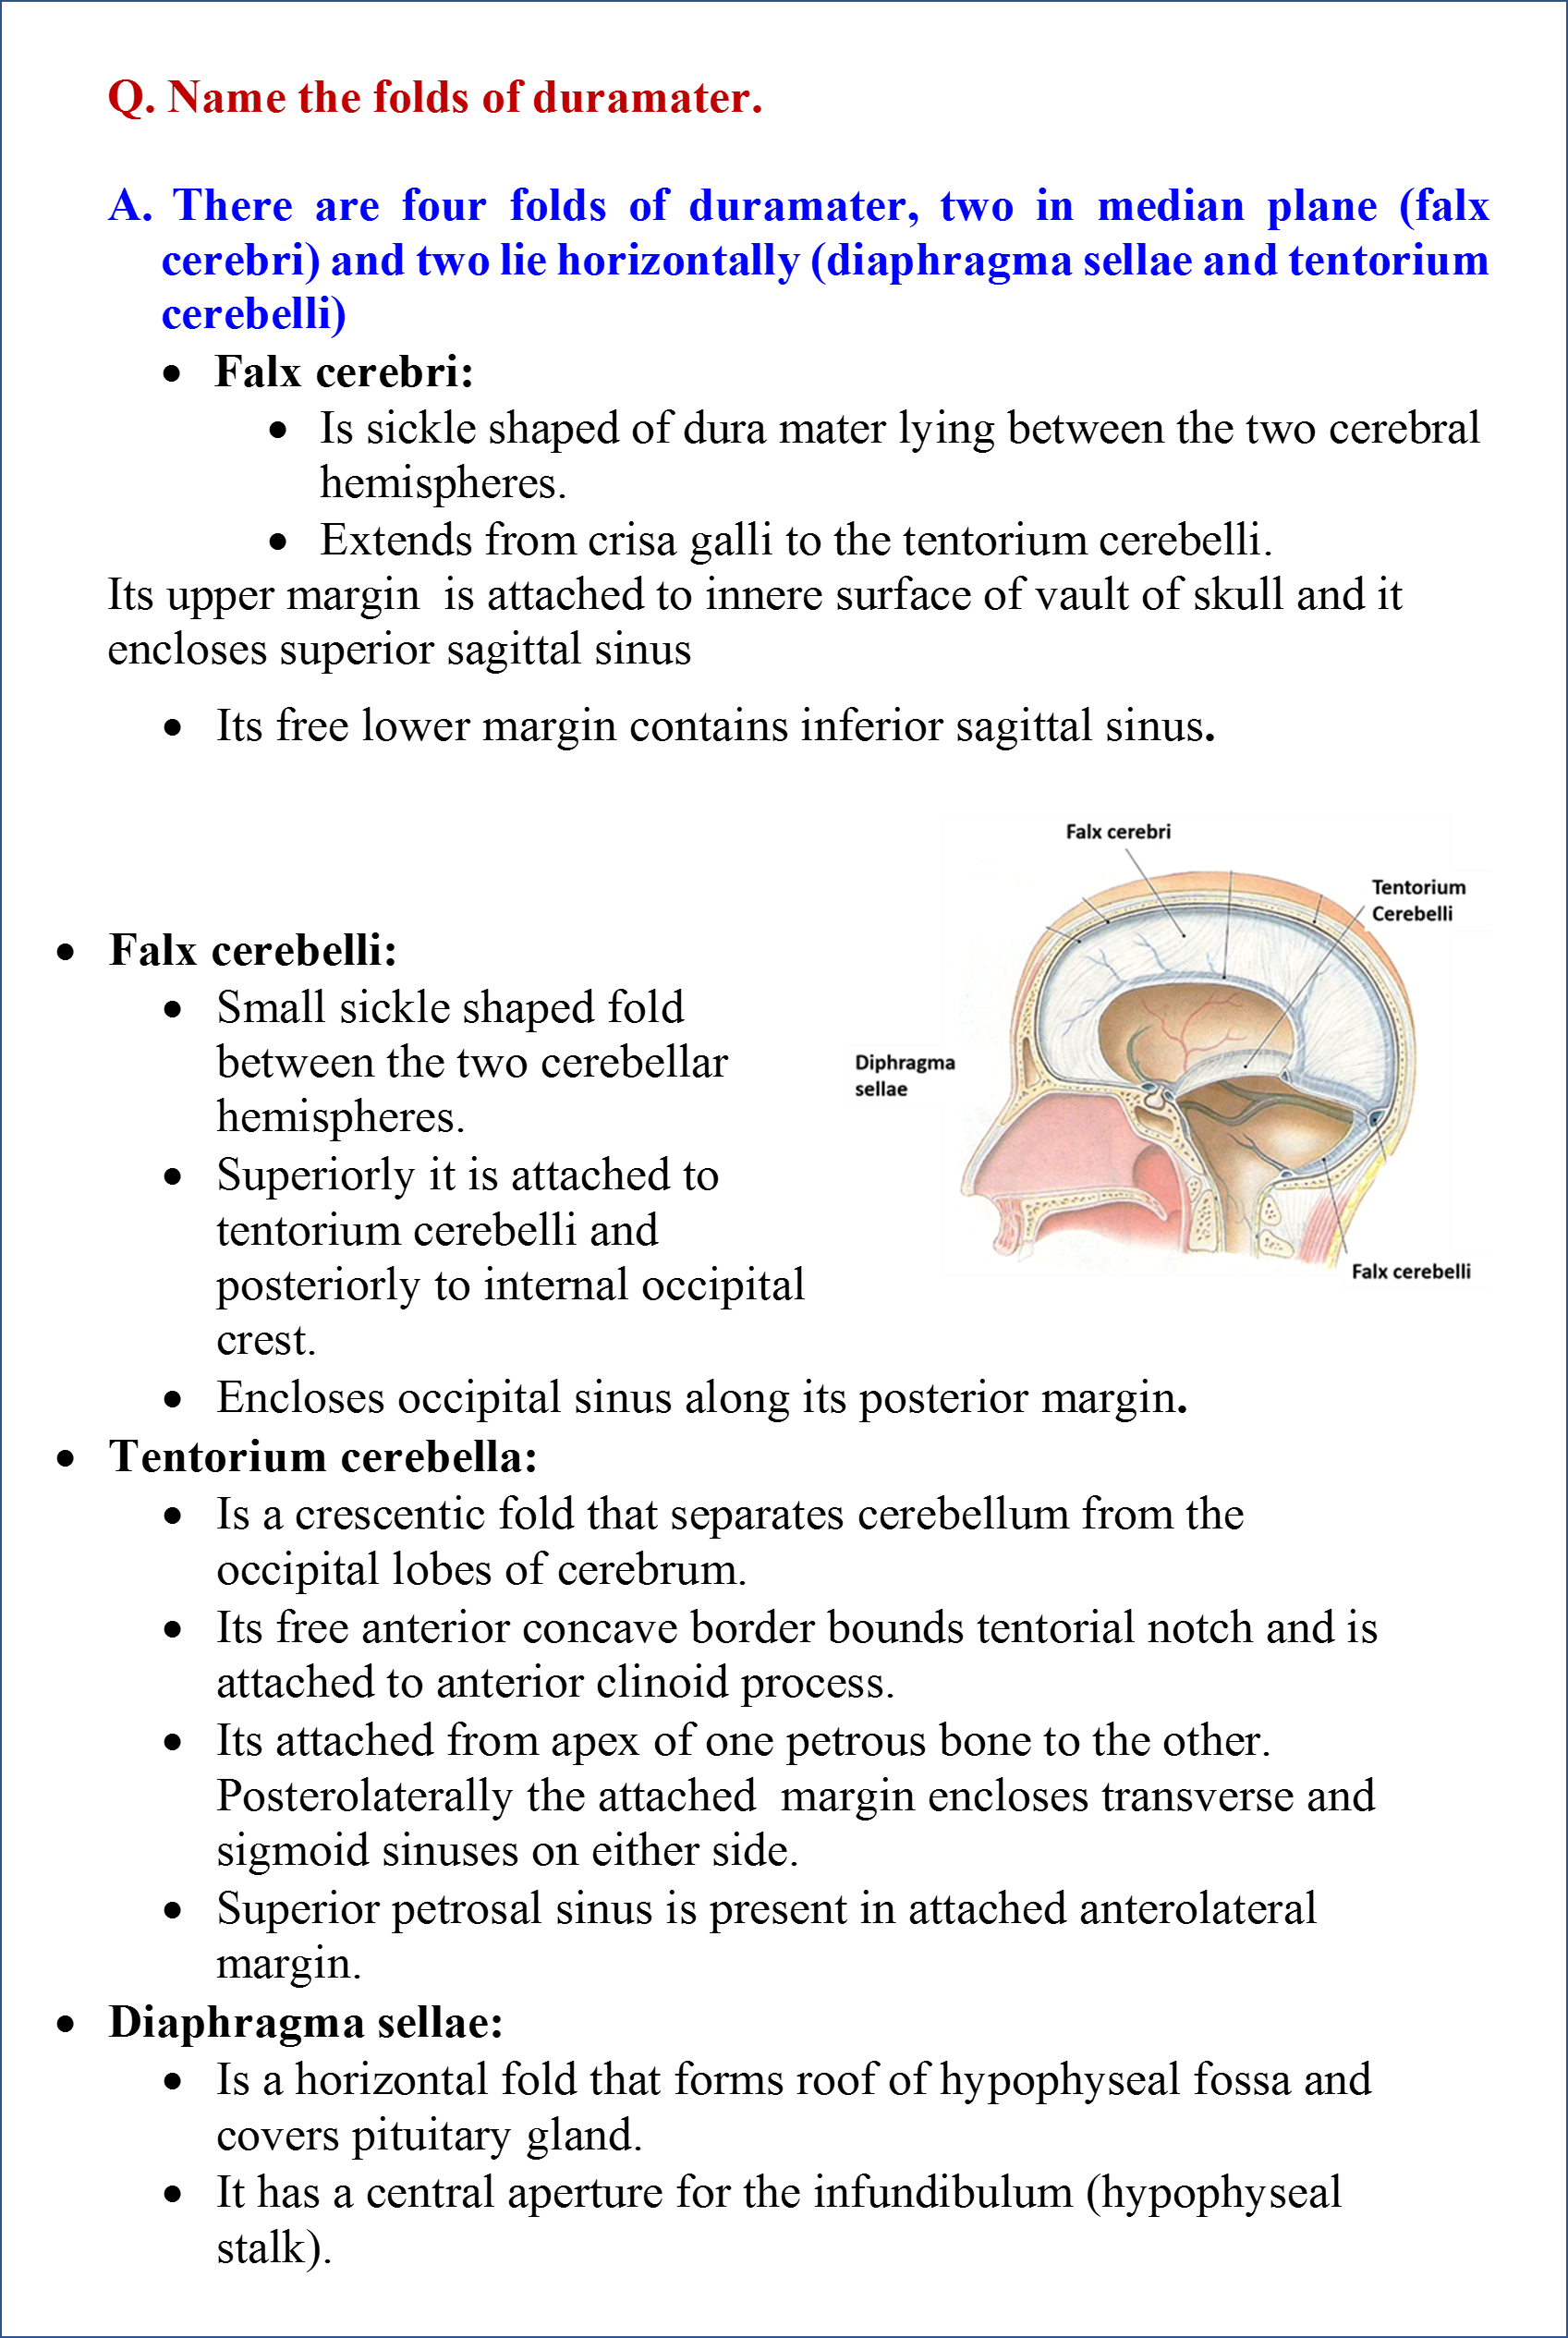 Dural Venous Sinuses - Cavernous sinus - Anatomy QA